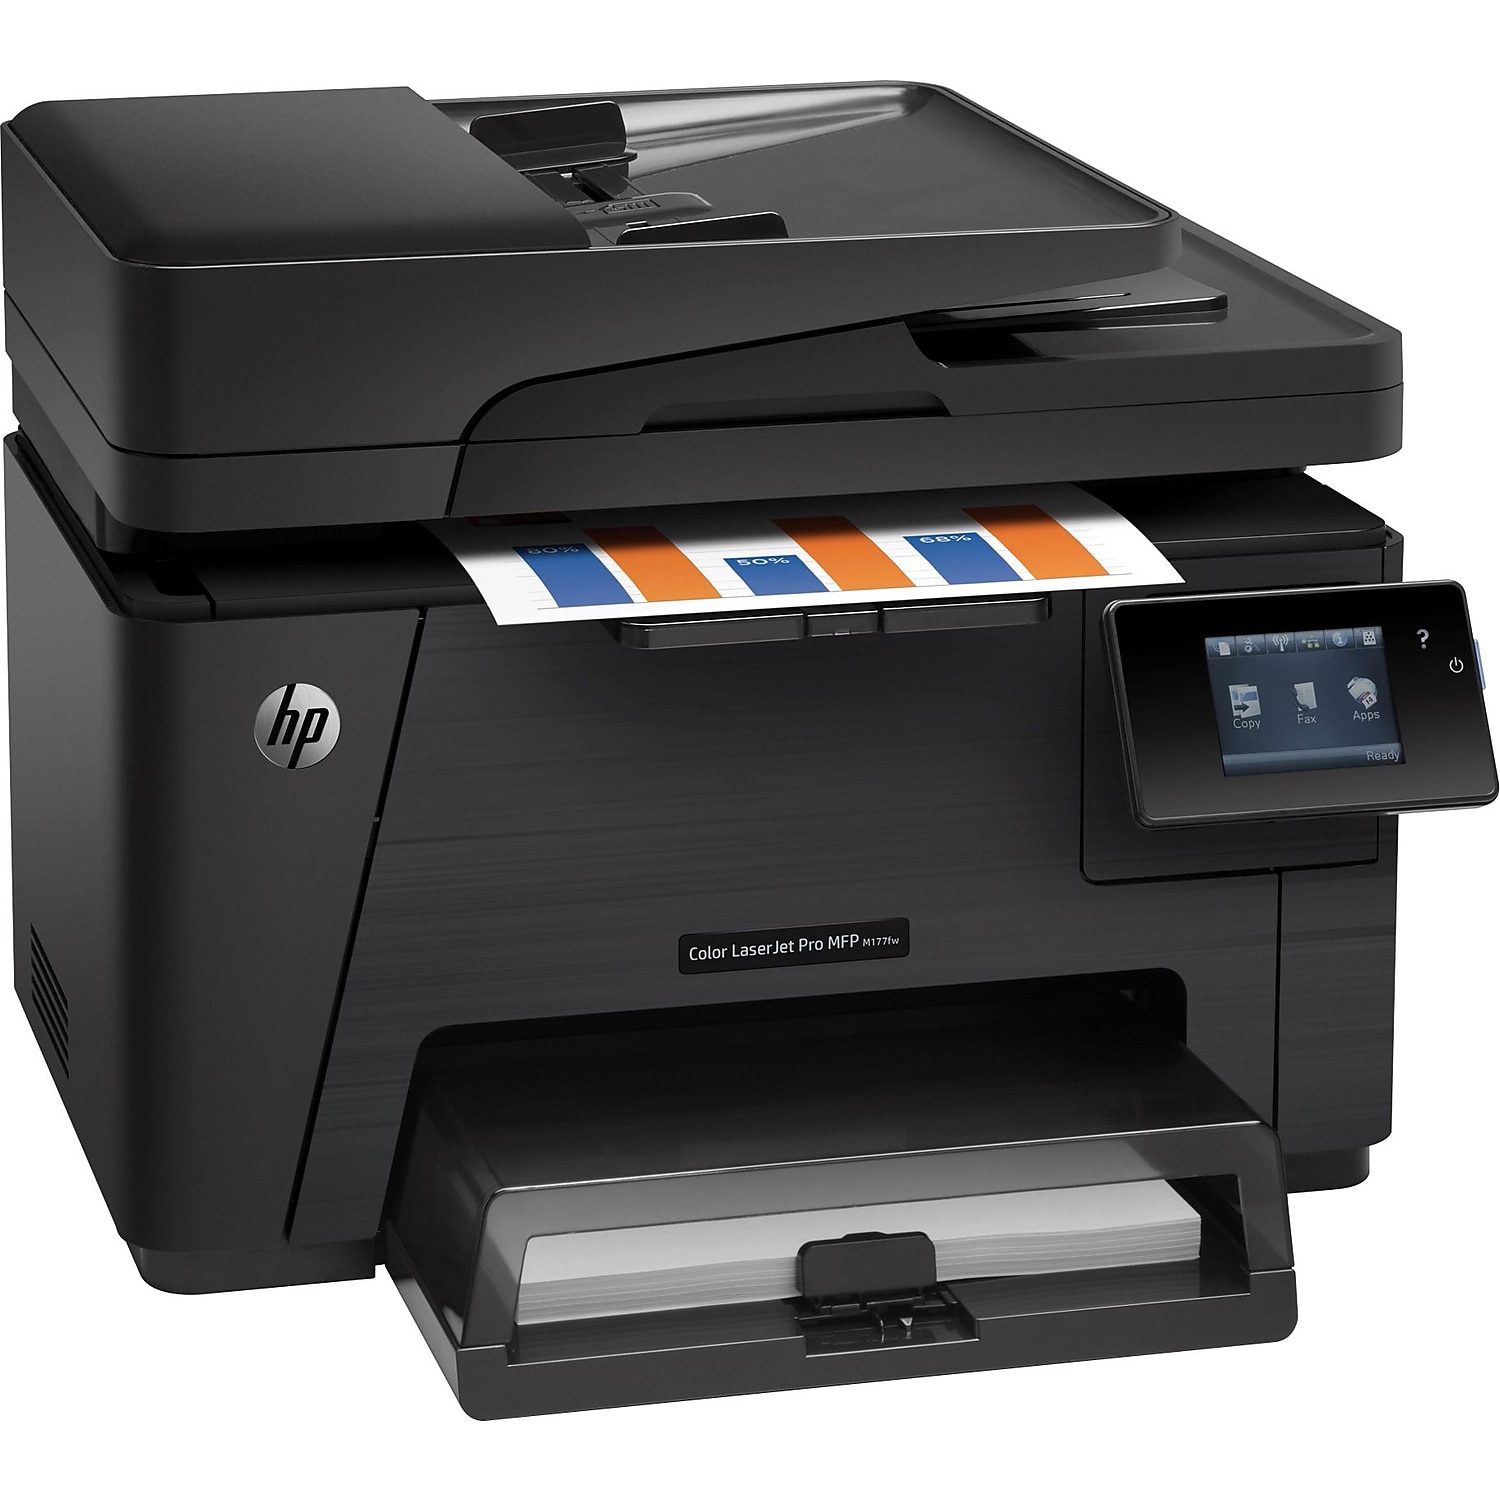 HP LaserJet Pro MFP M177fw - multifunction printer (color) - image 3 of 6